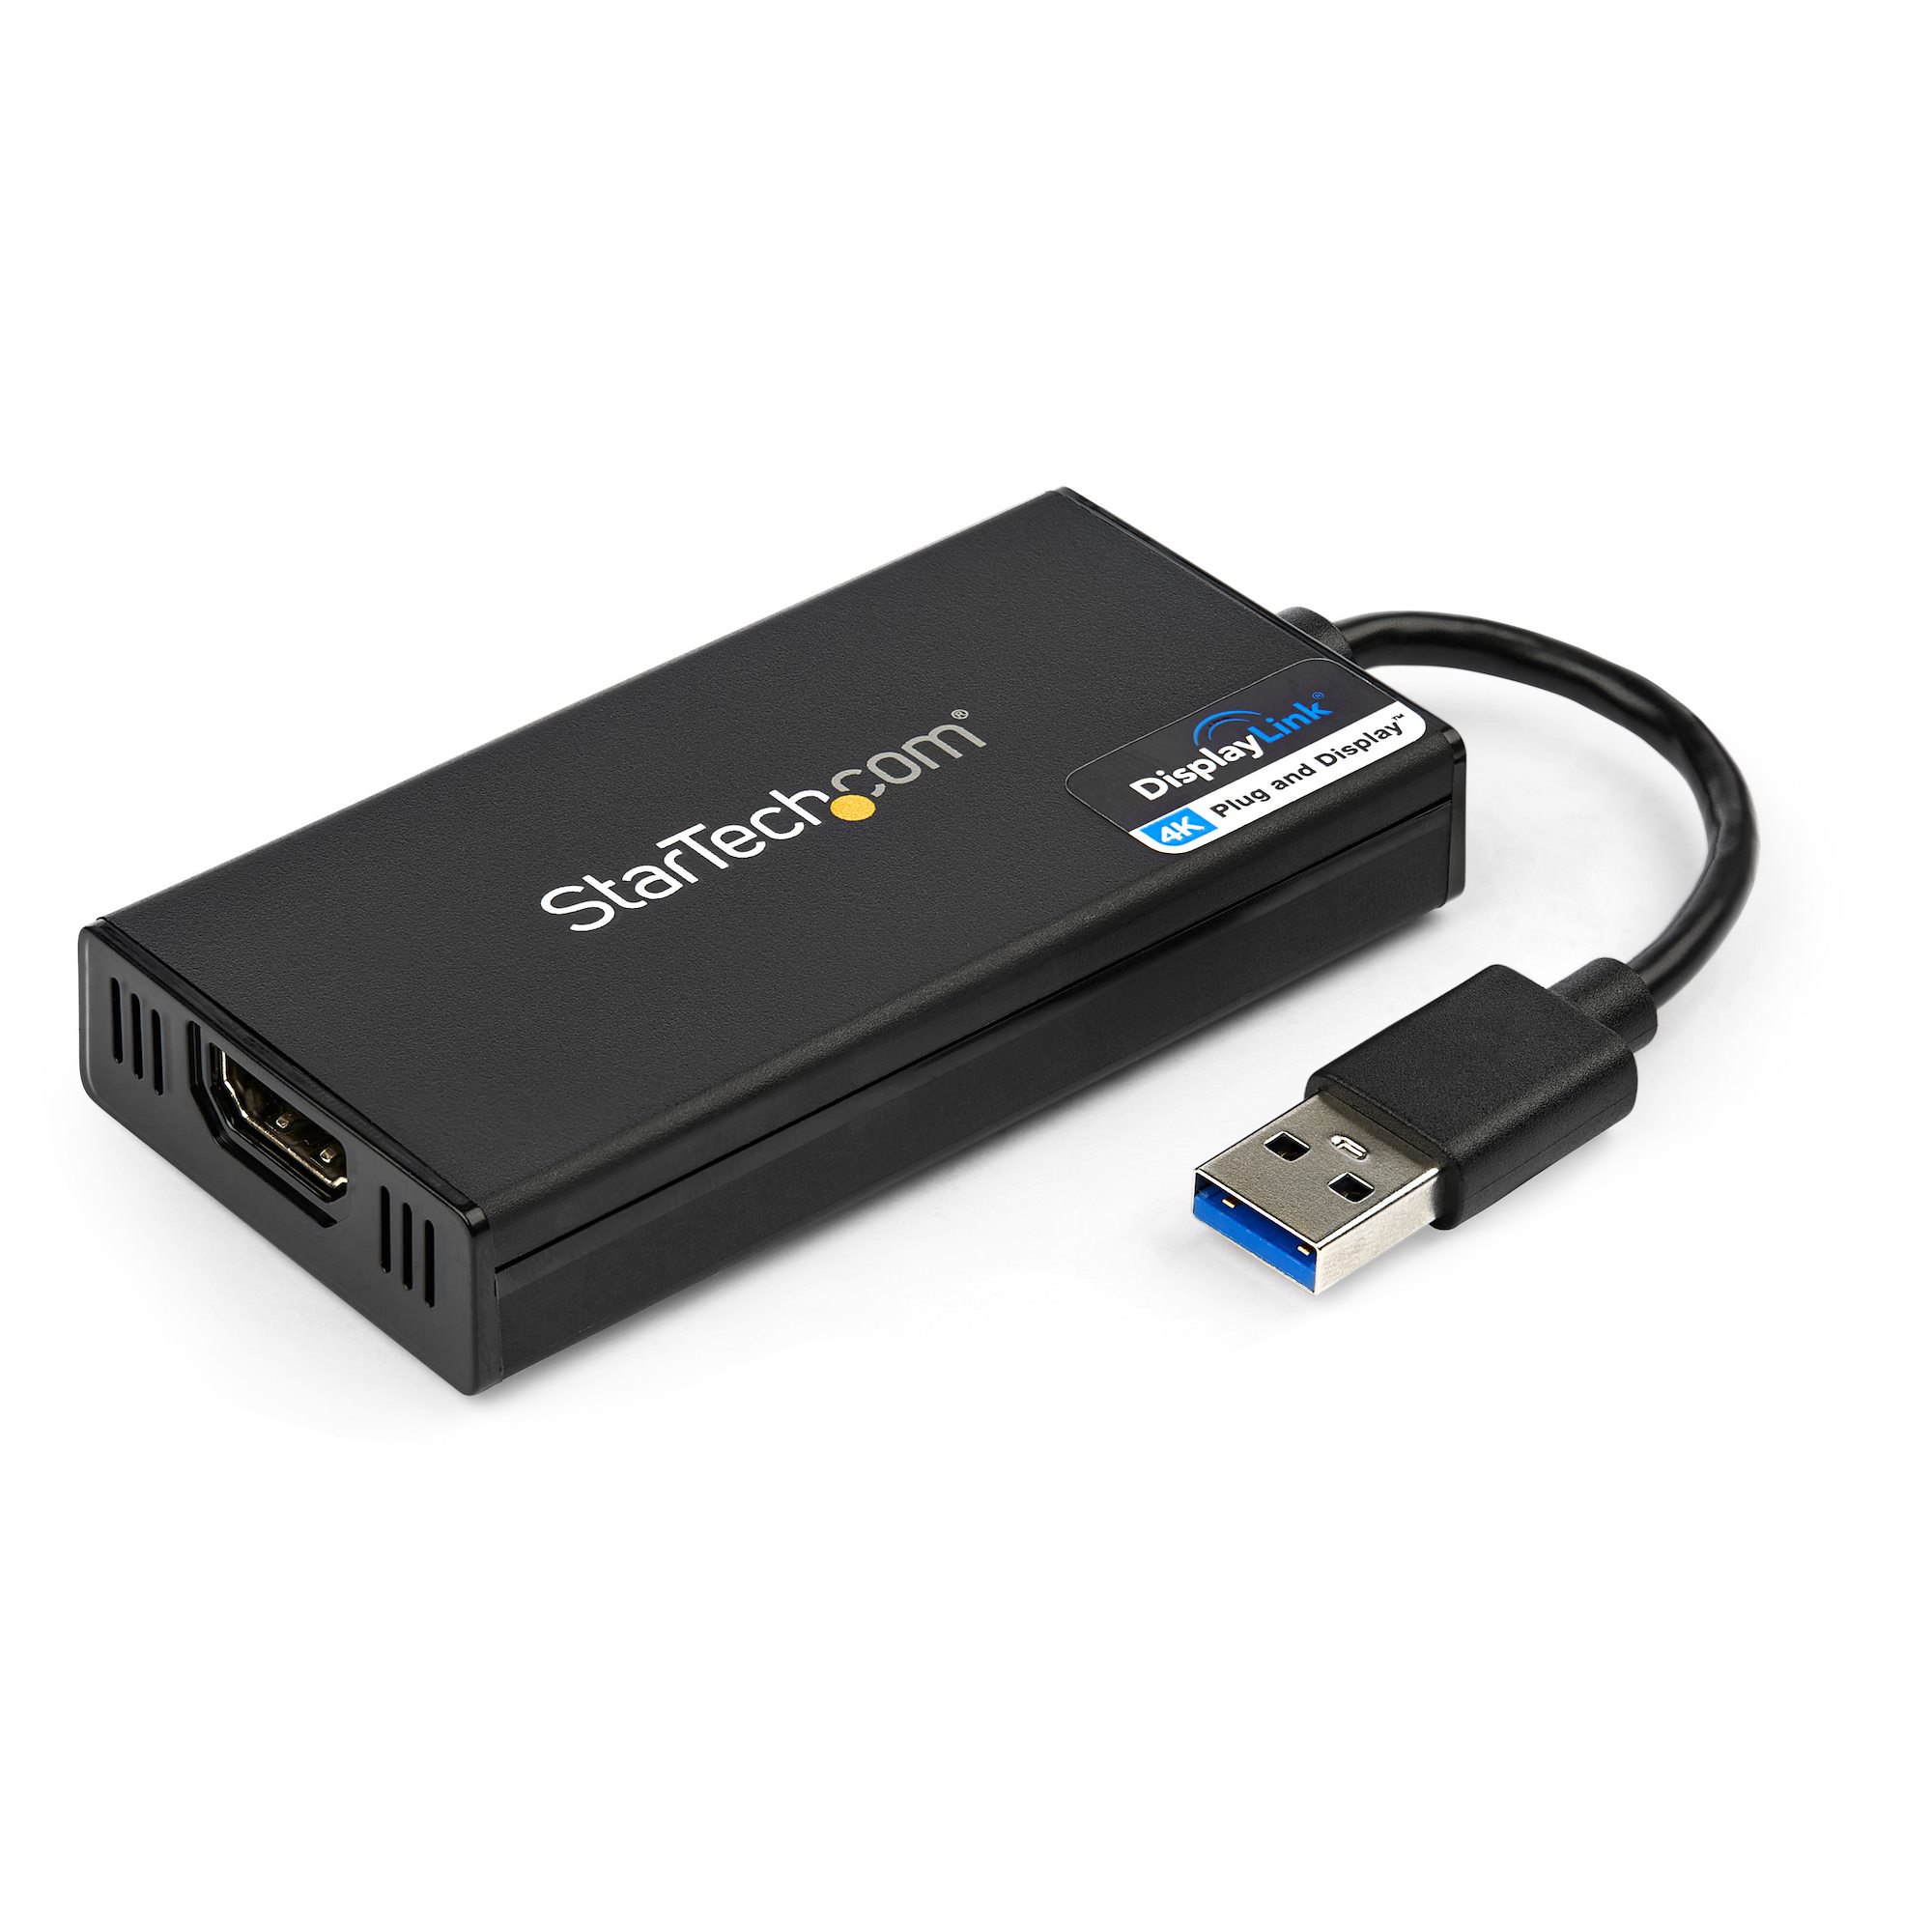 【USB32HD4K】USB 3.0 TO 4K HDMI EXTERNAL GRAP